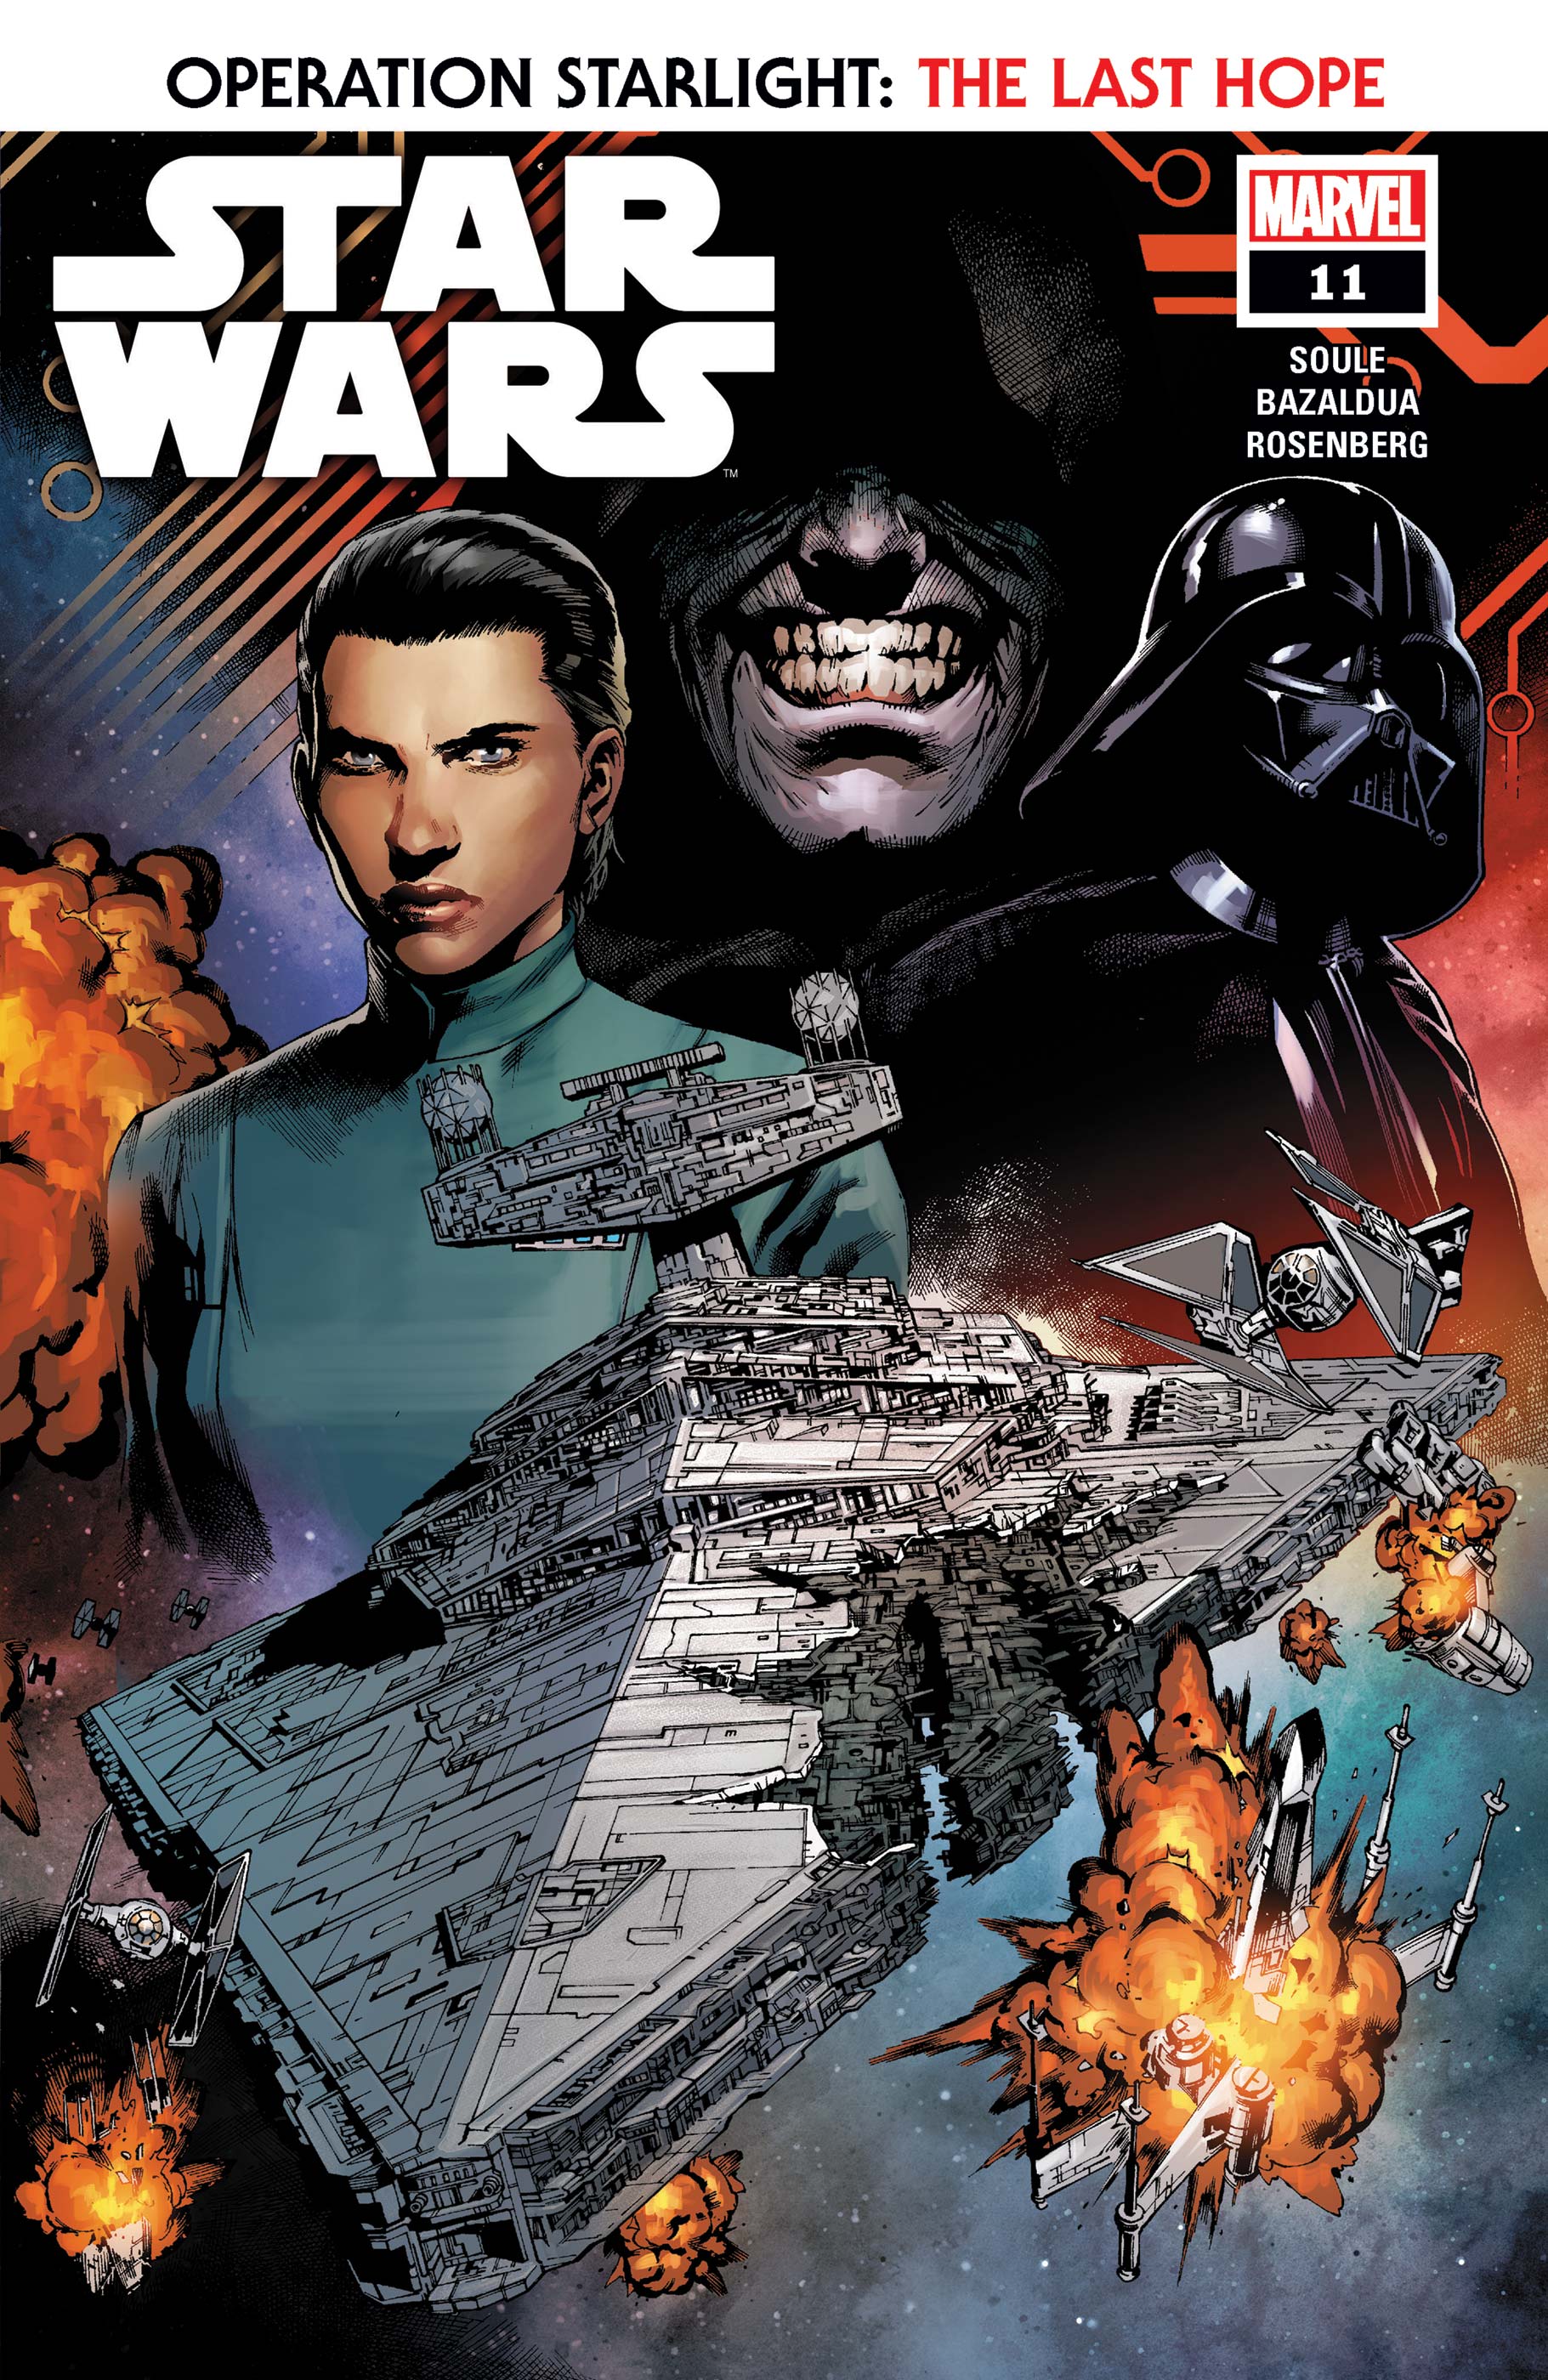 Star Wars (2020) #11